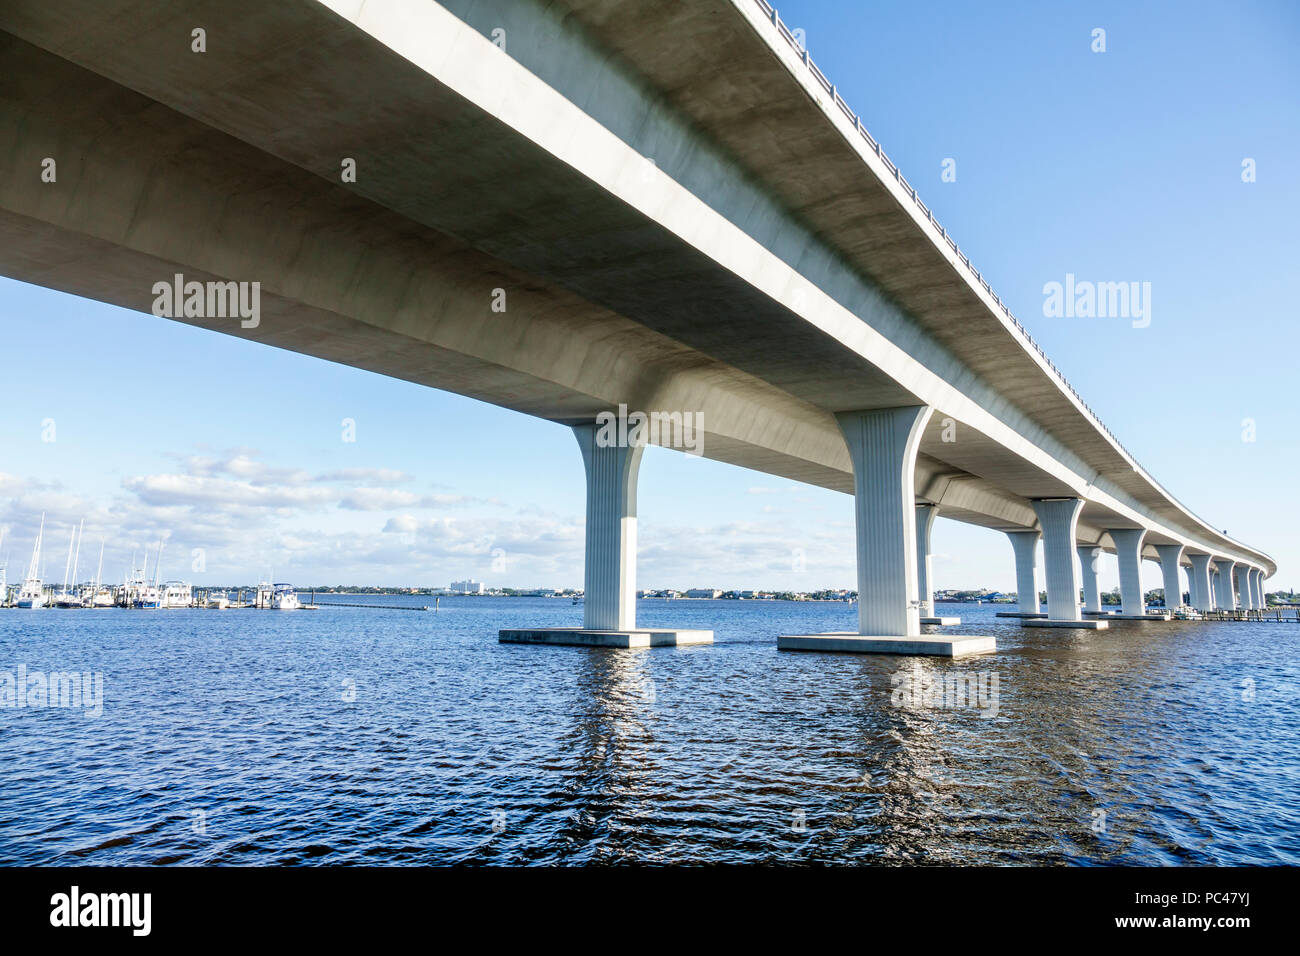 Stuart Florida,St. Saint Lucie River,Route 1 Federal Highway Roosevelt Bridge,concrete segmental bridge,support tower column,water,view from underneat Stock Photo